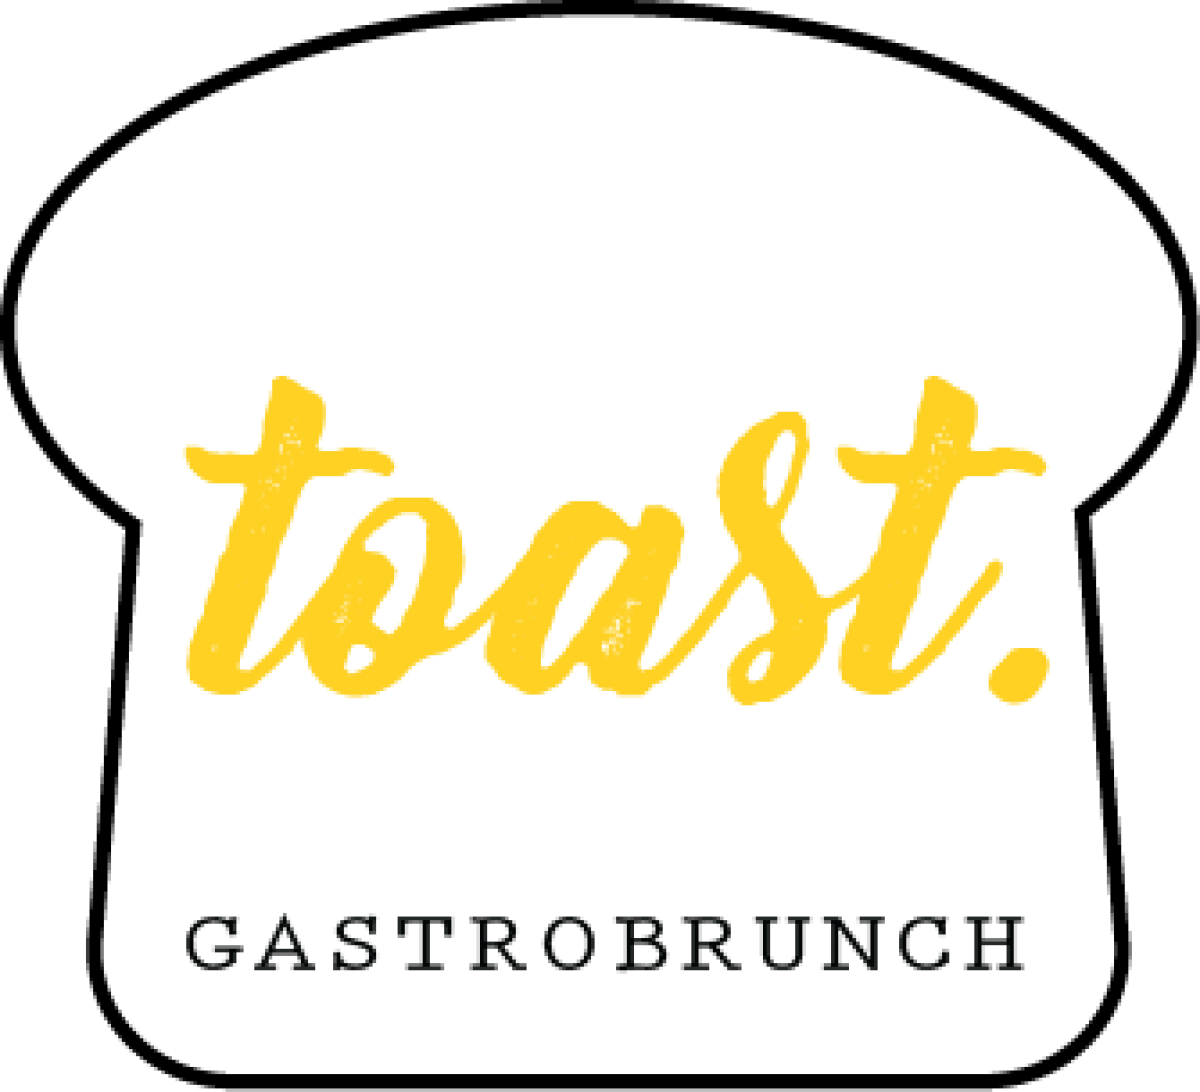 Toast Gastro Brunch Logo